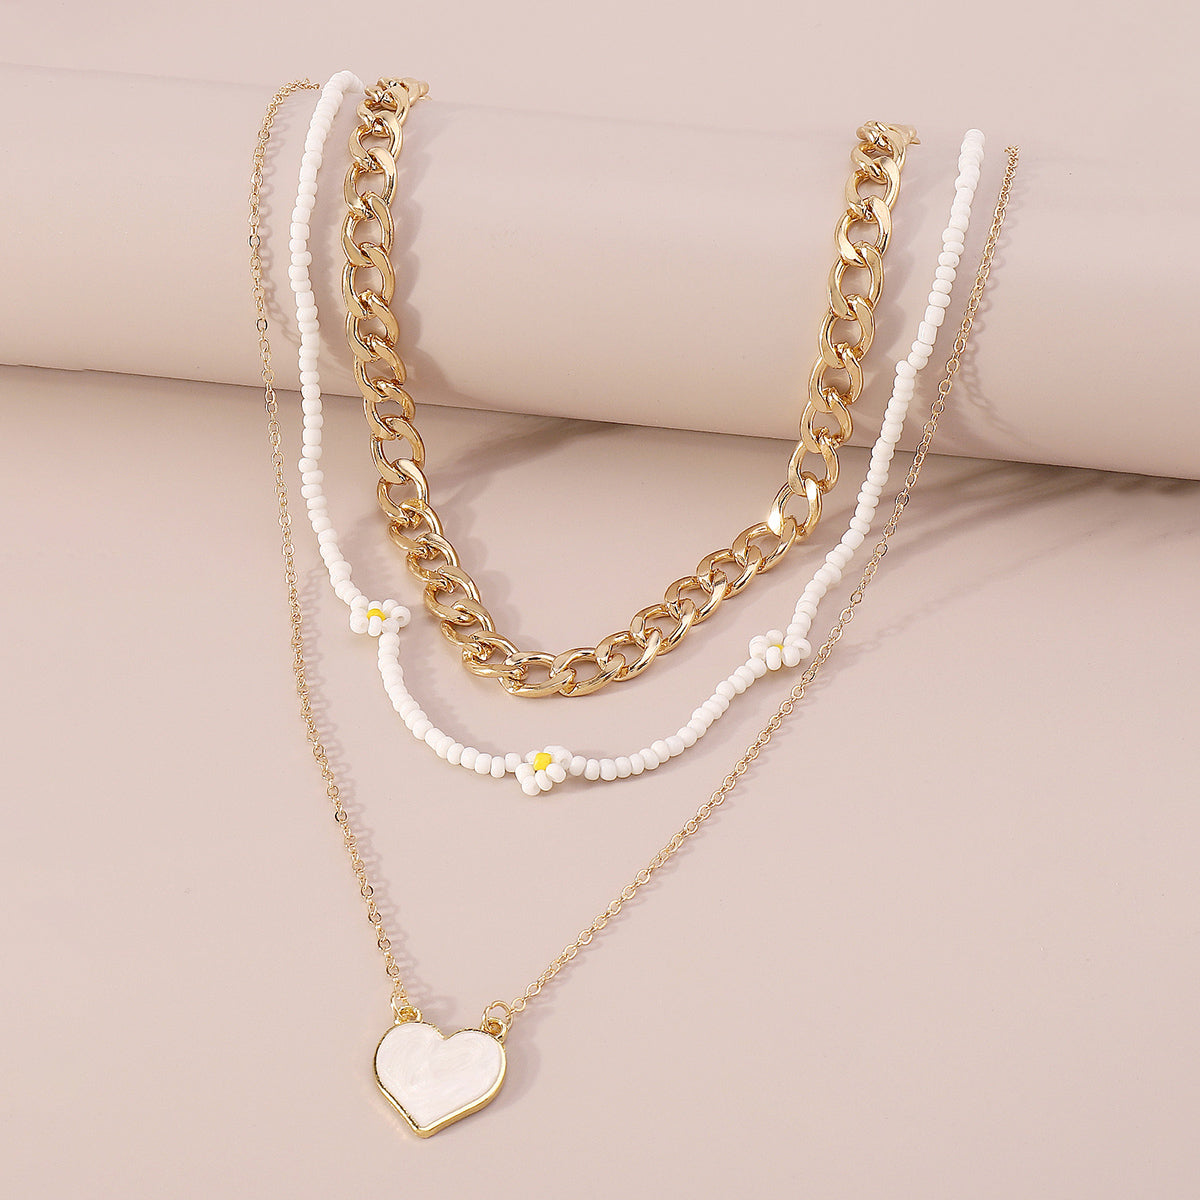 Boho Flower Beaded Chain Pink Heart Necklace medyjewelry